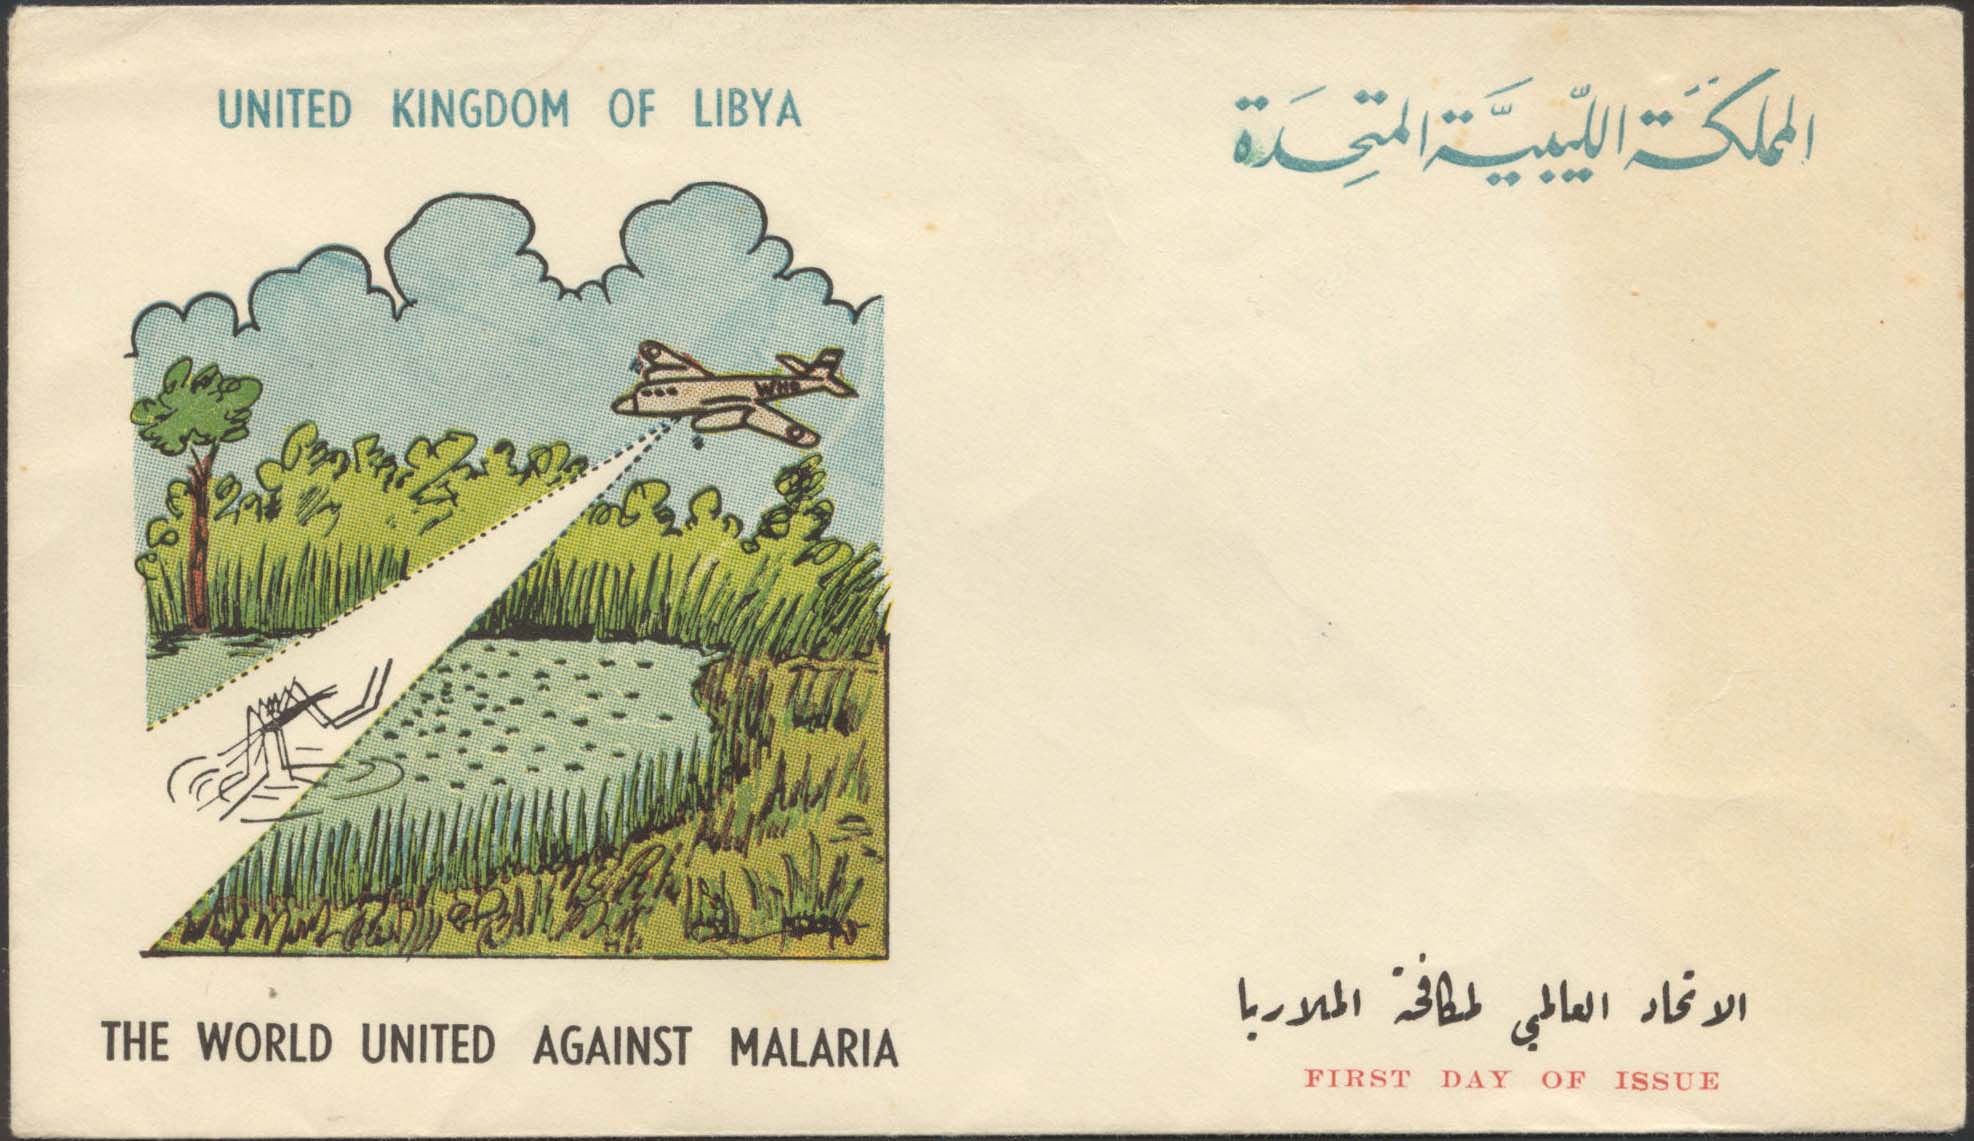 Cachet For United Kingdom of Libya Scott 218-219 With Plane Spraying over Swamp